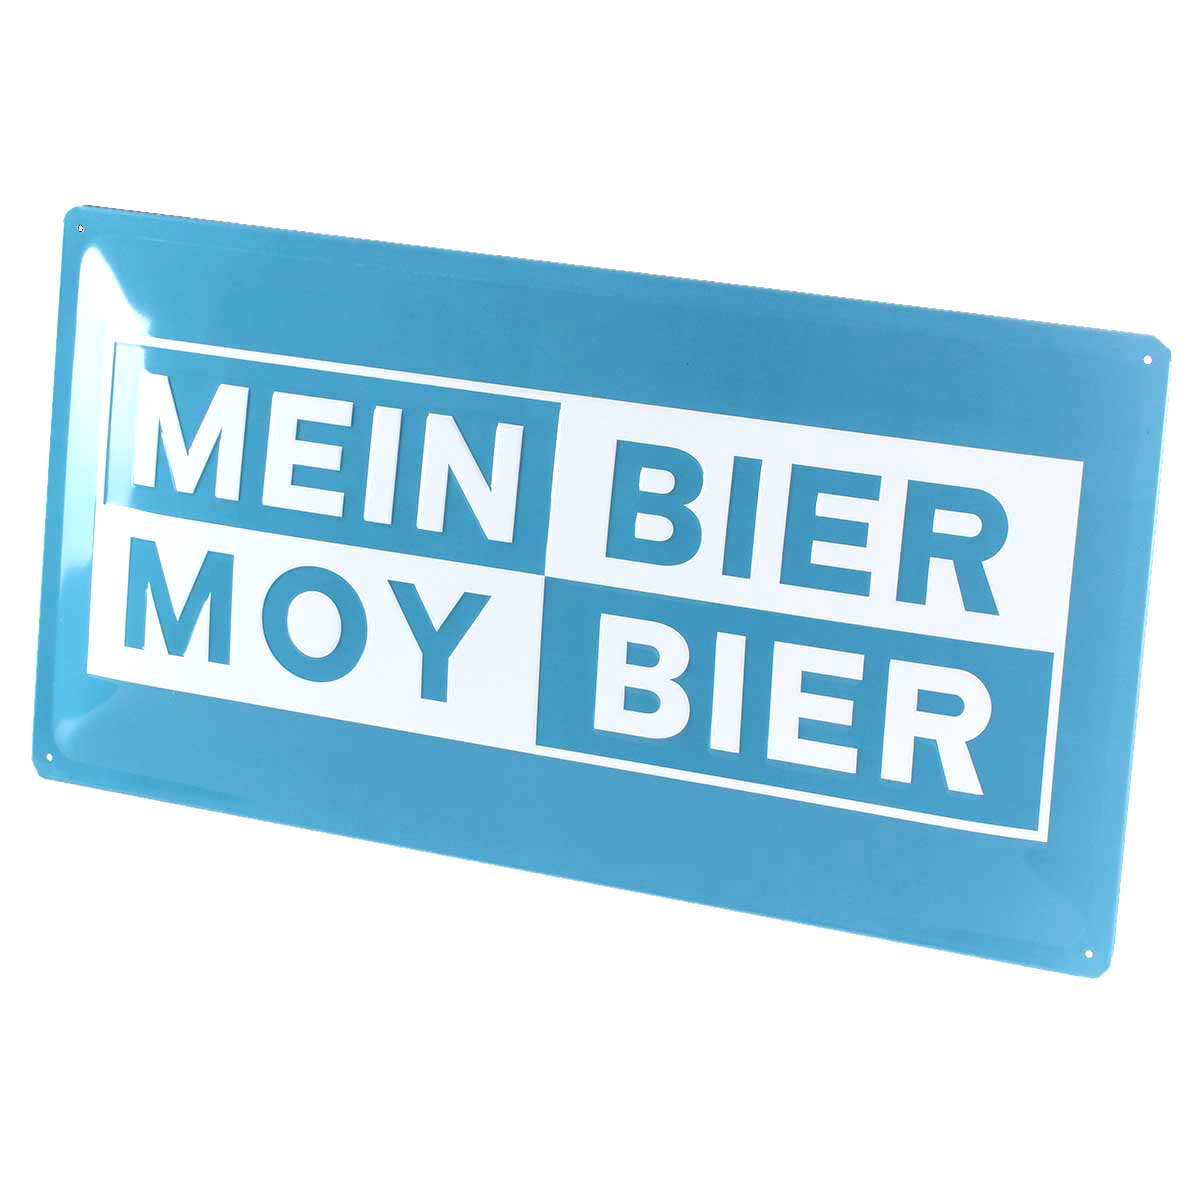 Moy Blechschild - Mein Bier, Moy Bier